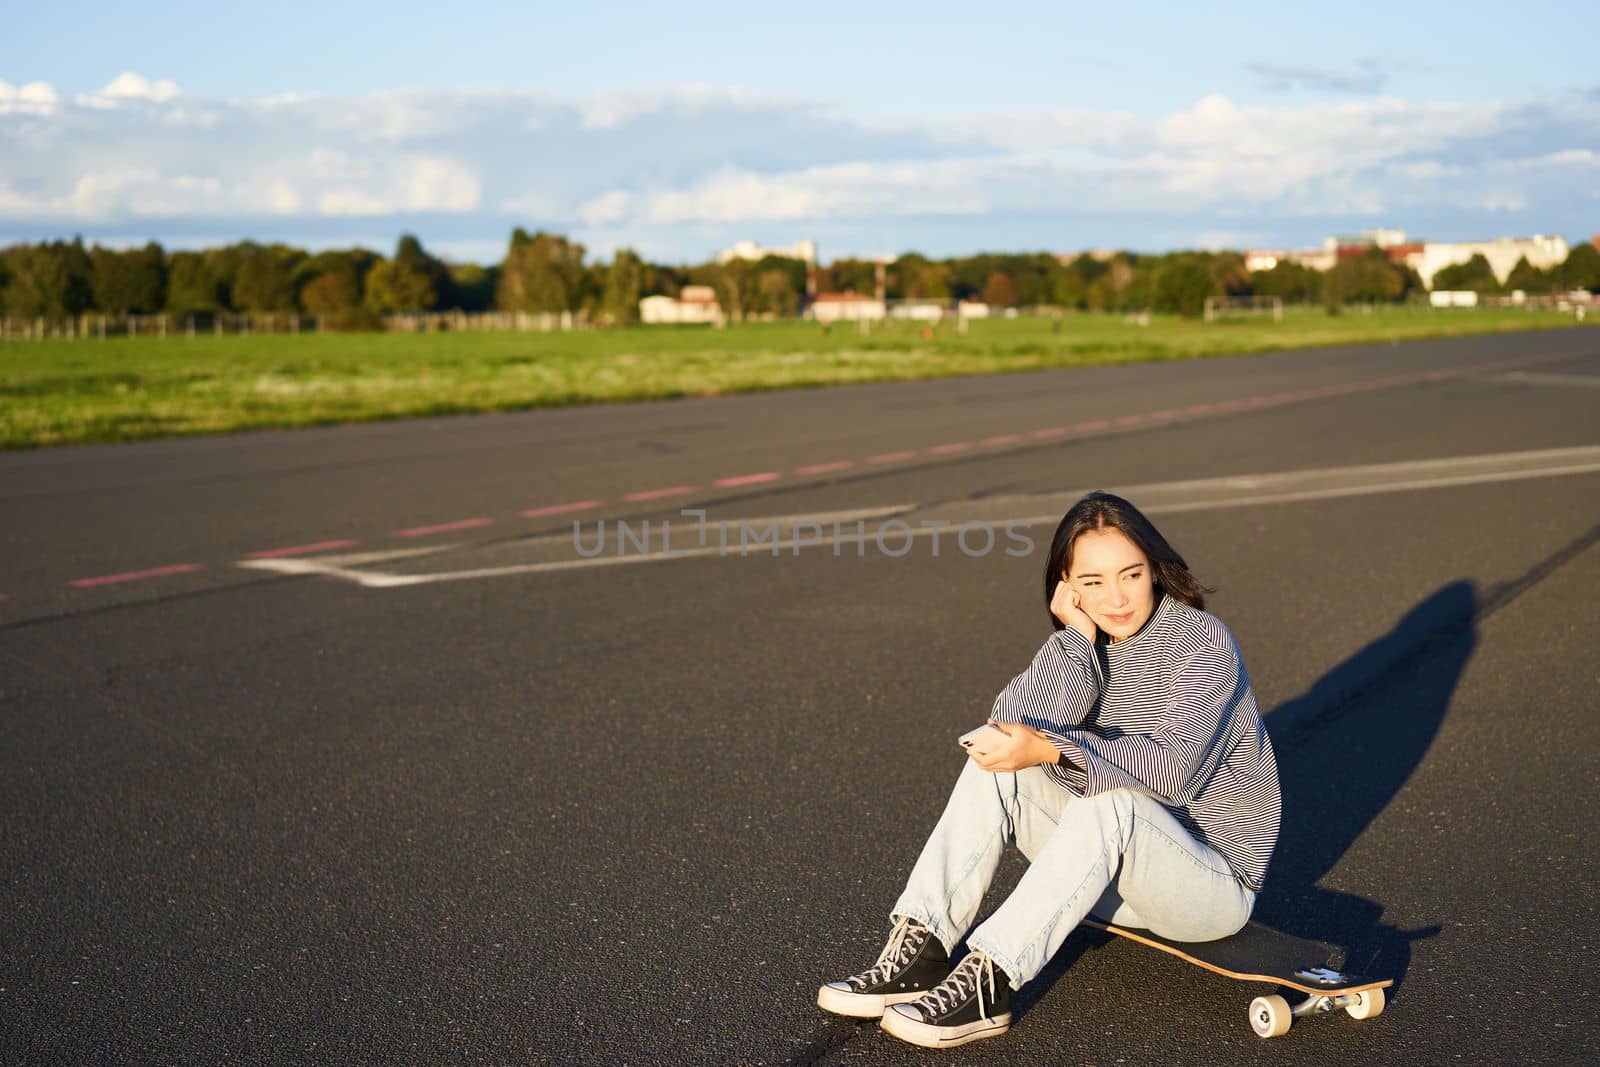 Skater girl sits on her skateboard on road, using smartphone, chatting on mobile app.